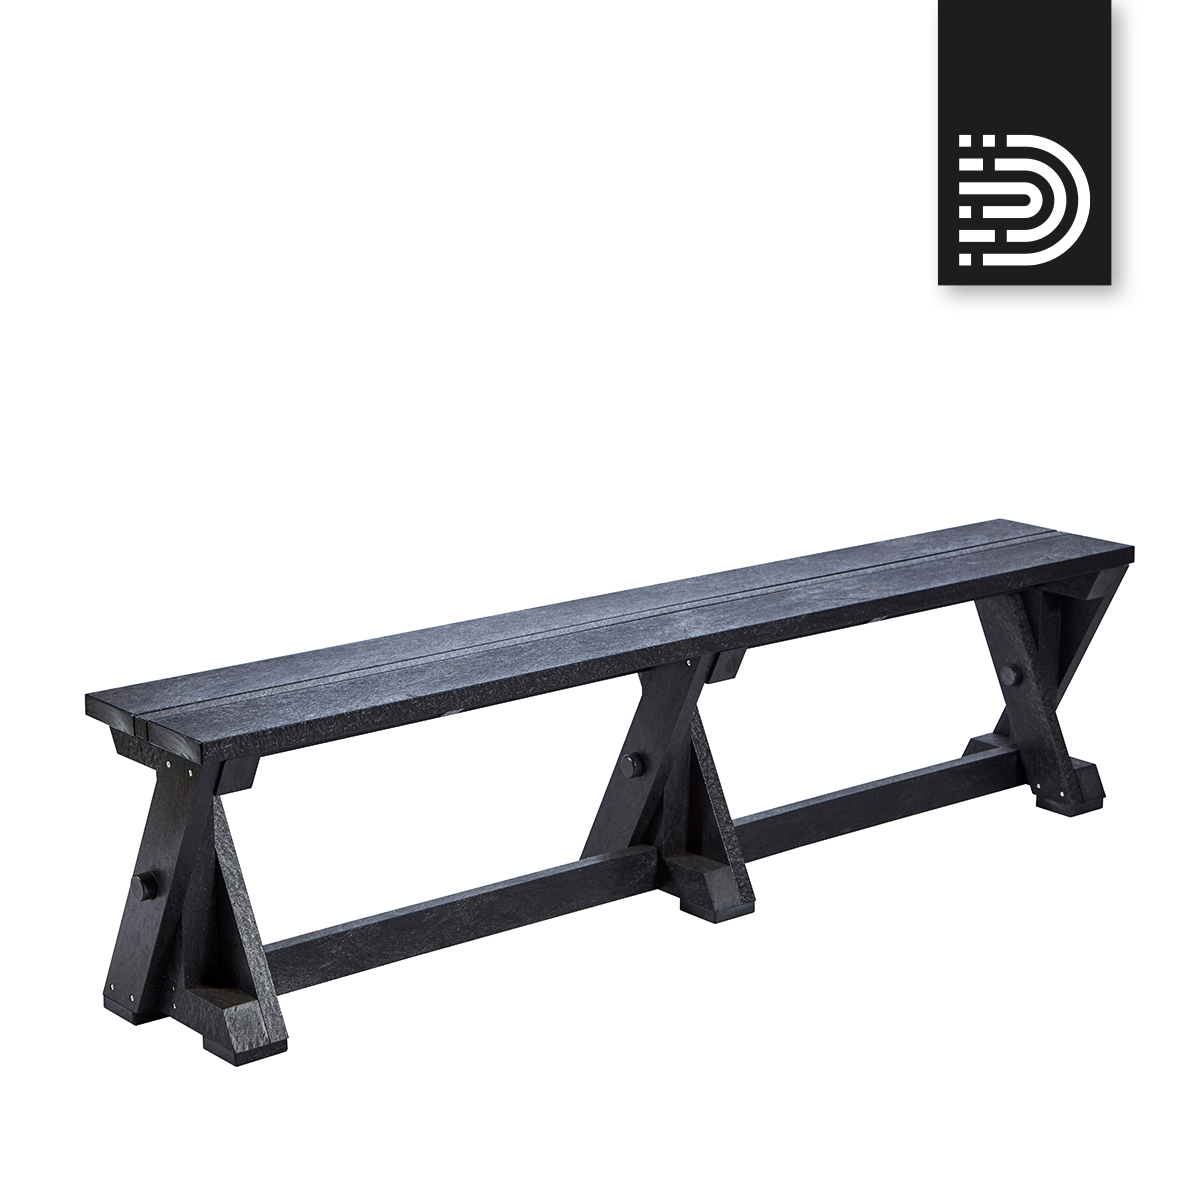 B201 Dining Tabel Bench - black 14